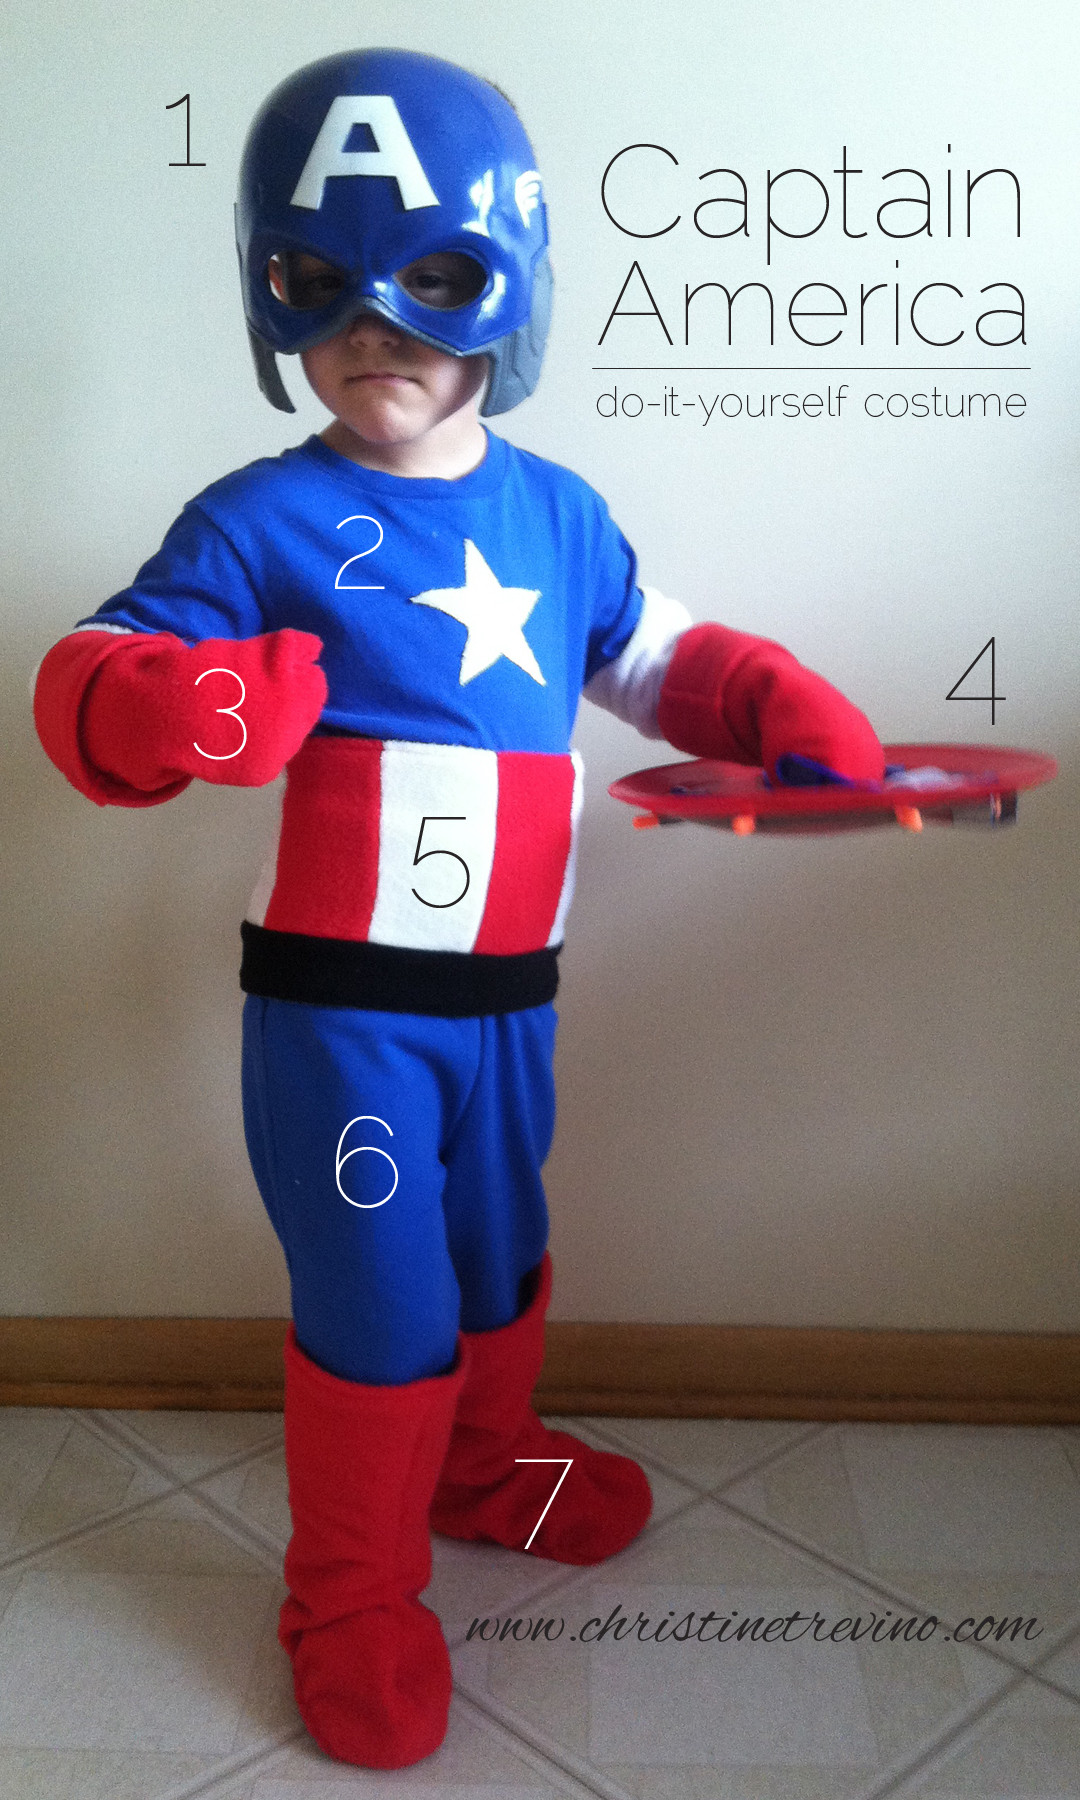 Best ideas about Captain America Costume DIY
. Save or Pin Captain America Costume Christine Trevino Now.